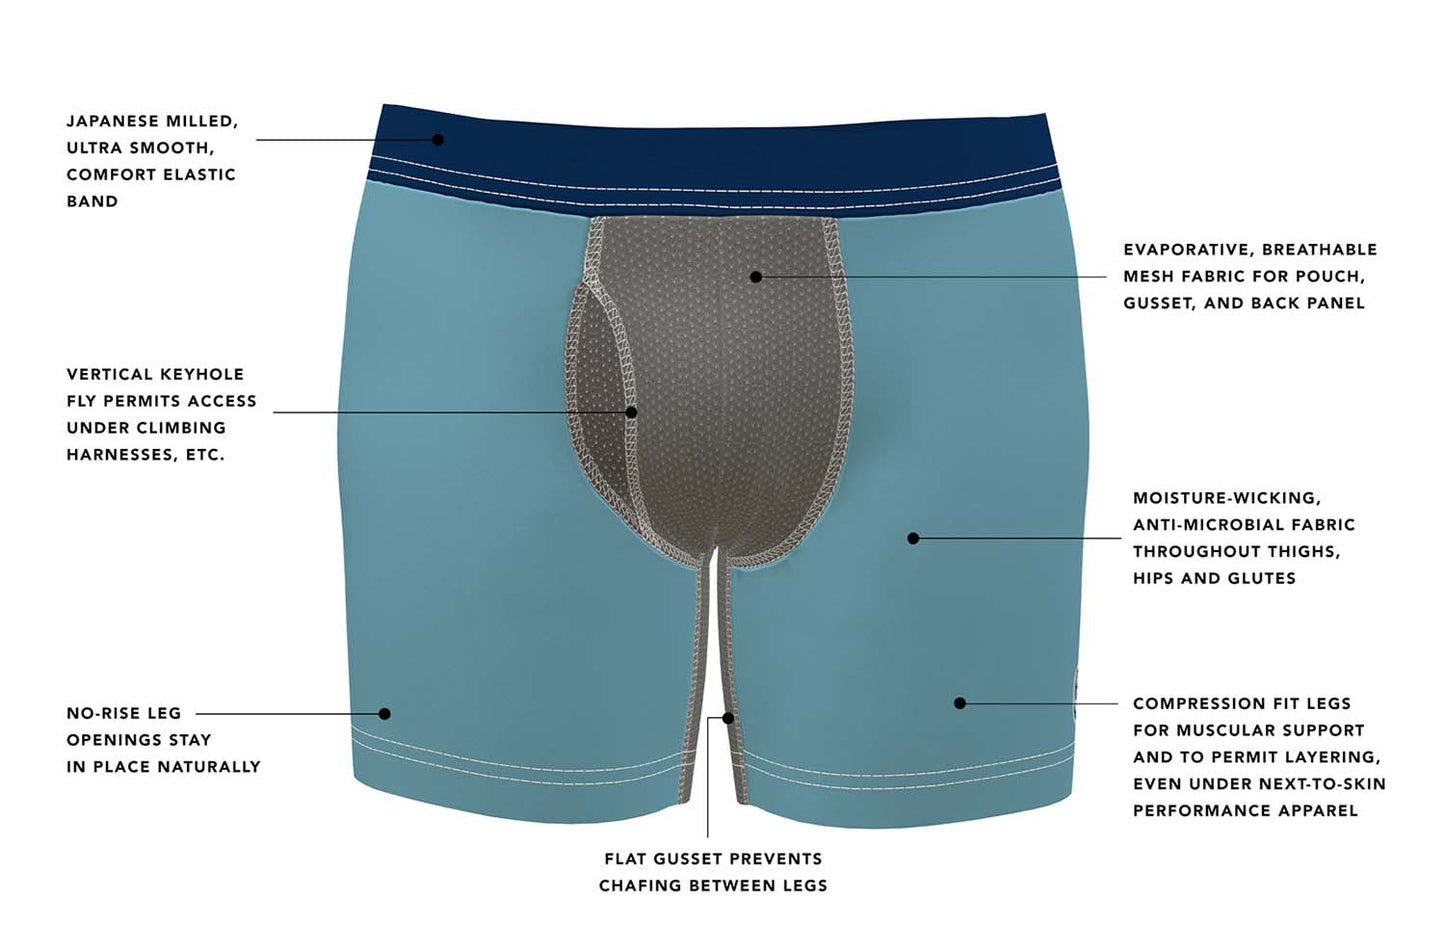 The Perfect Pair™ 1.0 (3-Pack) - Underwear - Serac